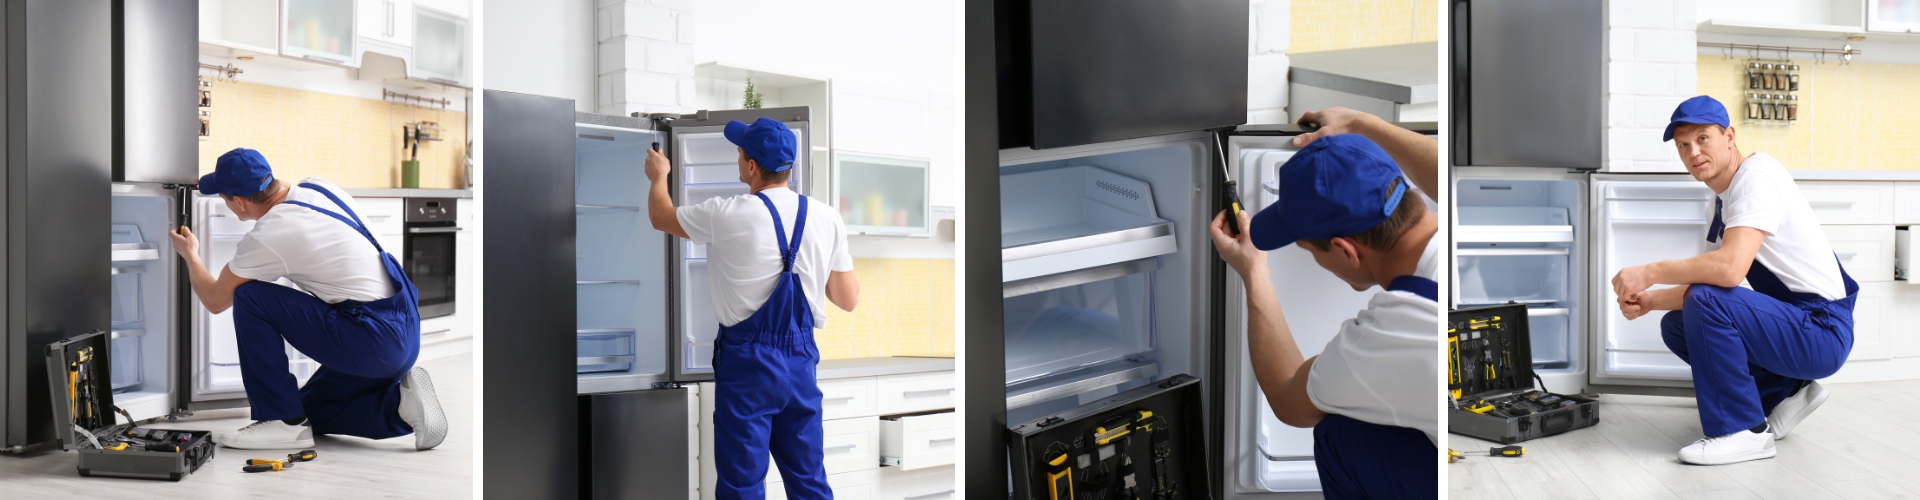 refrigerator-repair-service